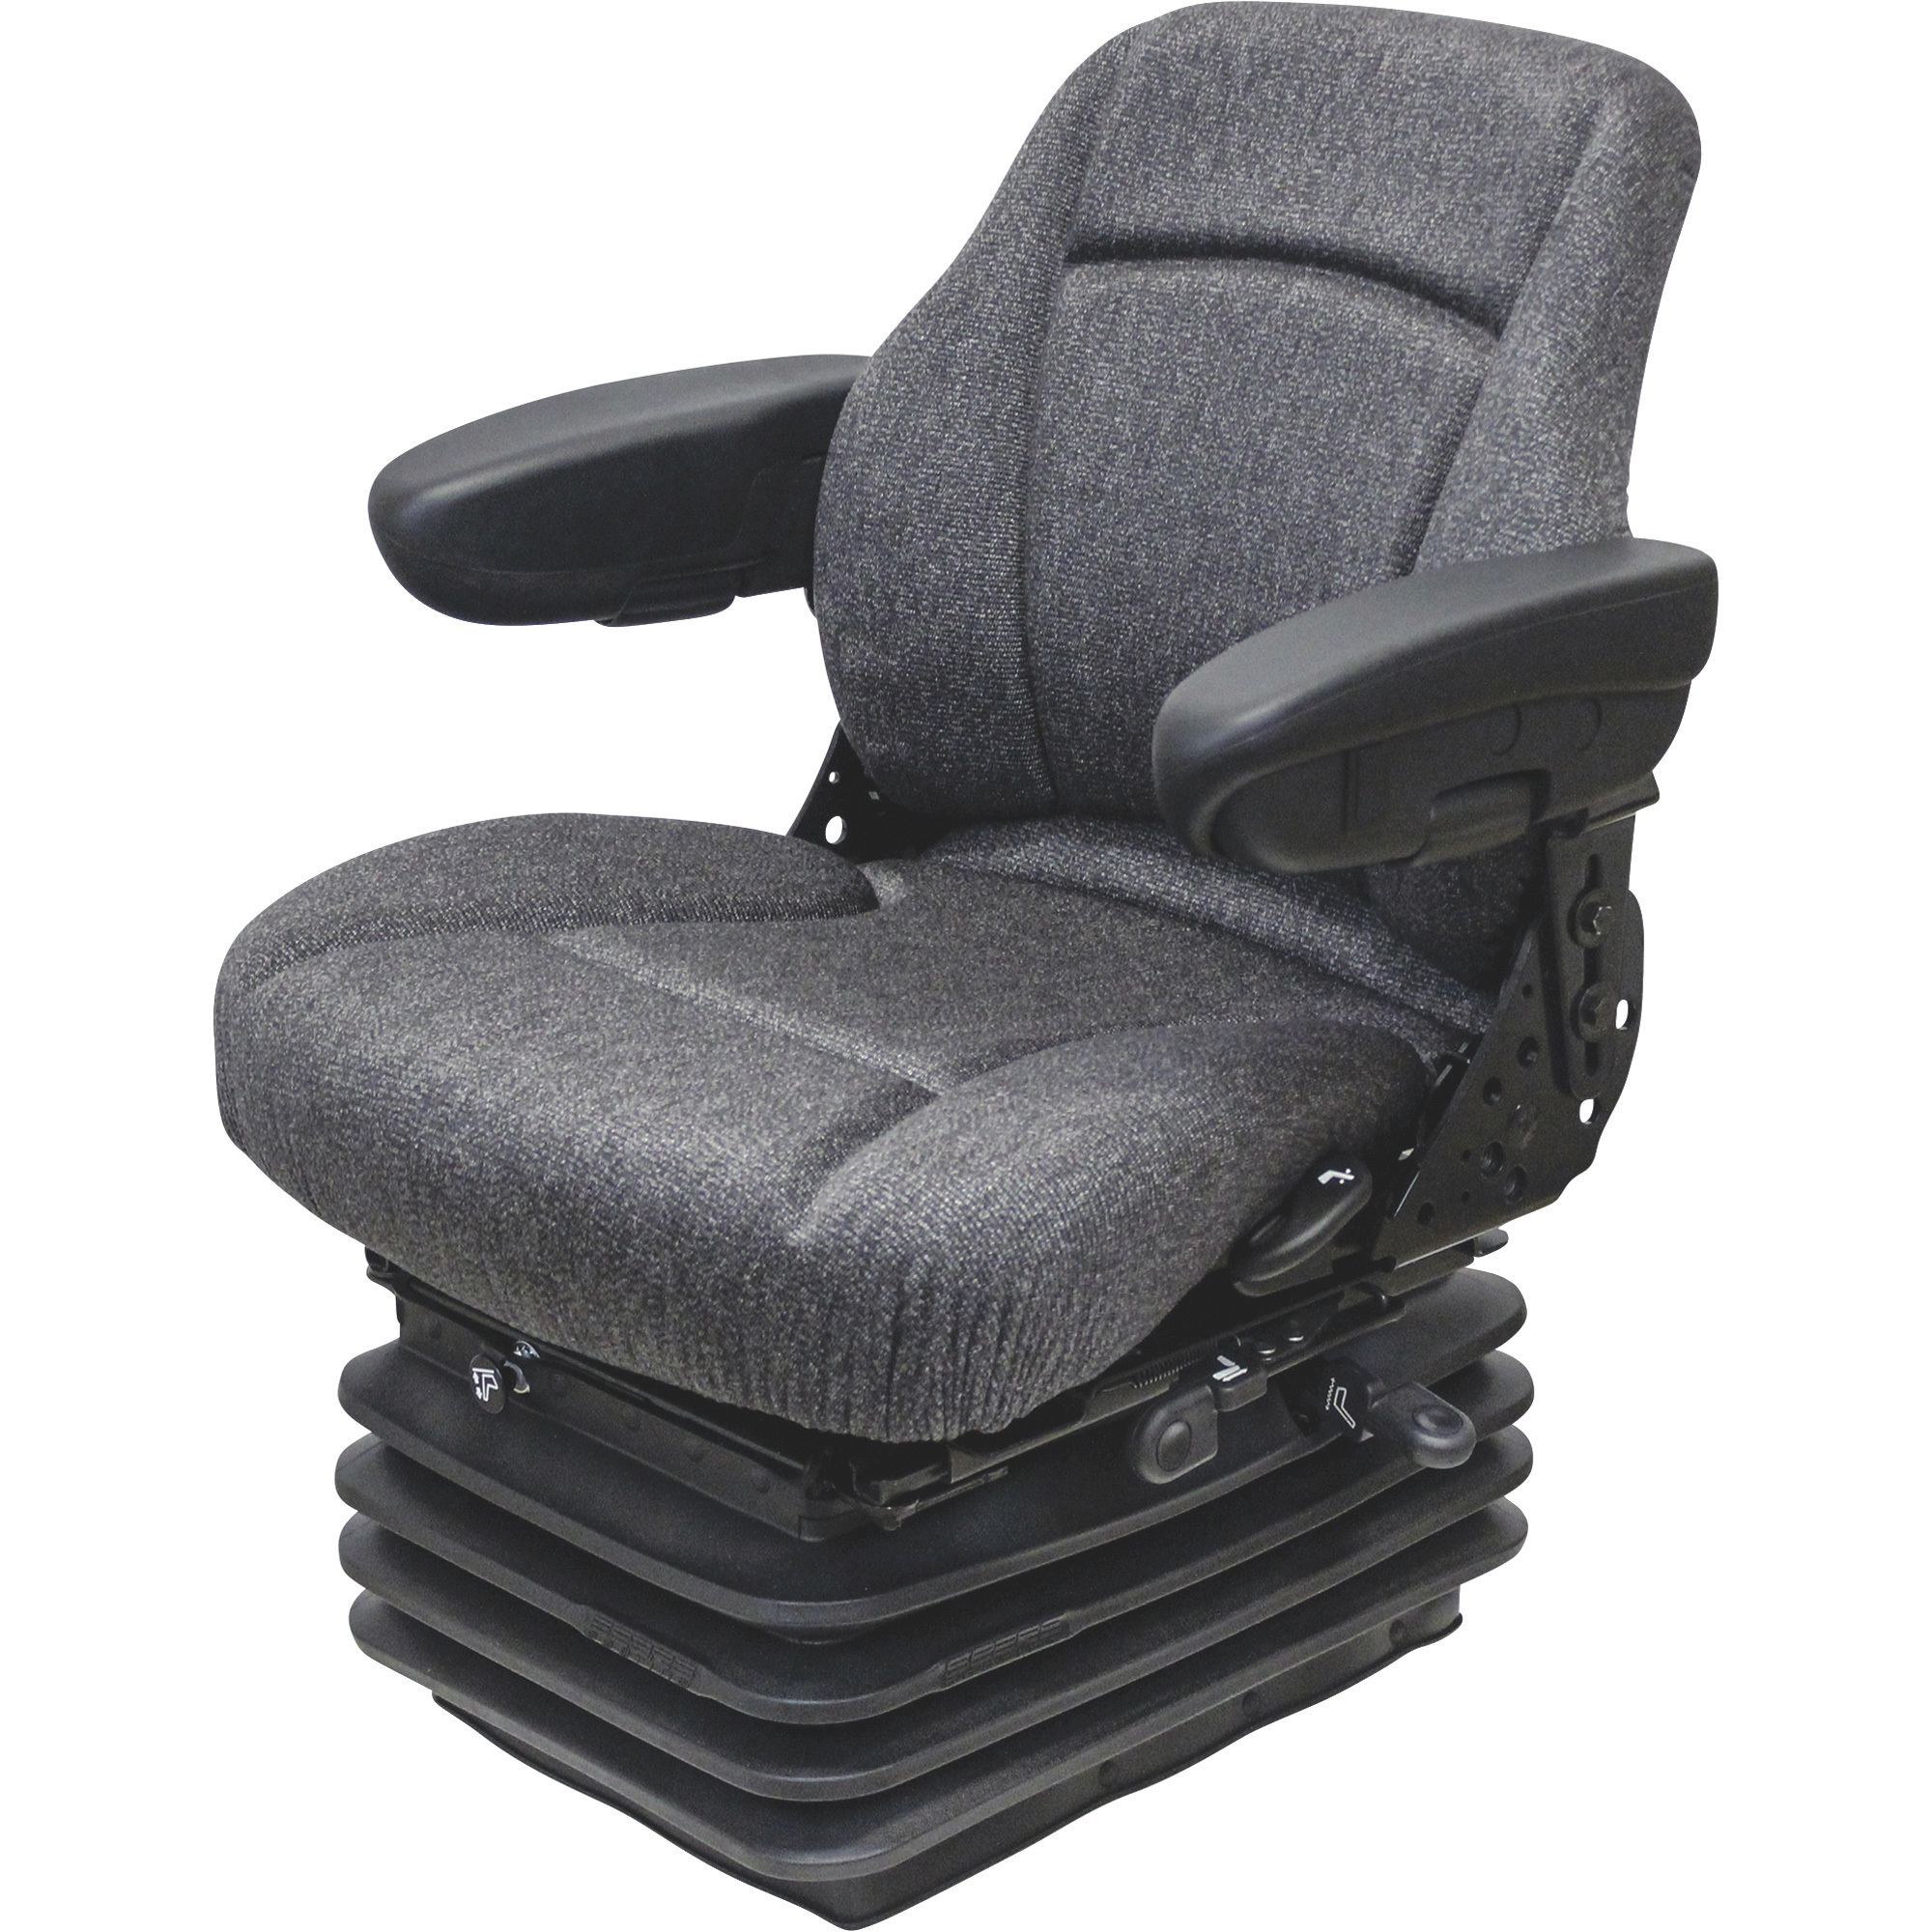 K&M Uni Pro KM 1003 Deluxe Seat and Suspension with 12 Volt Compressor, Fabric, Gray, Model 7915